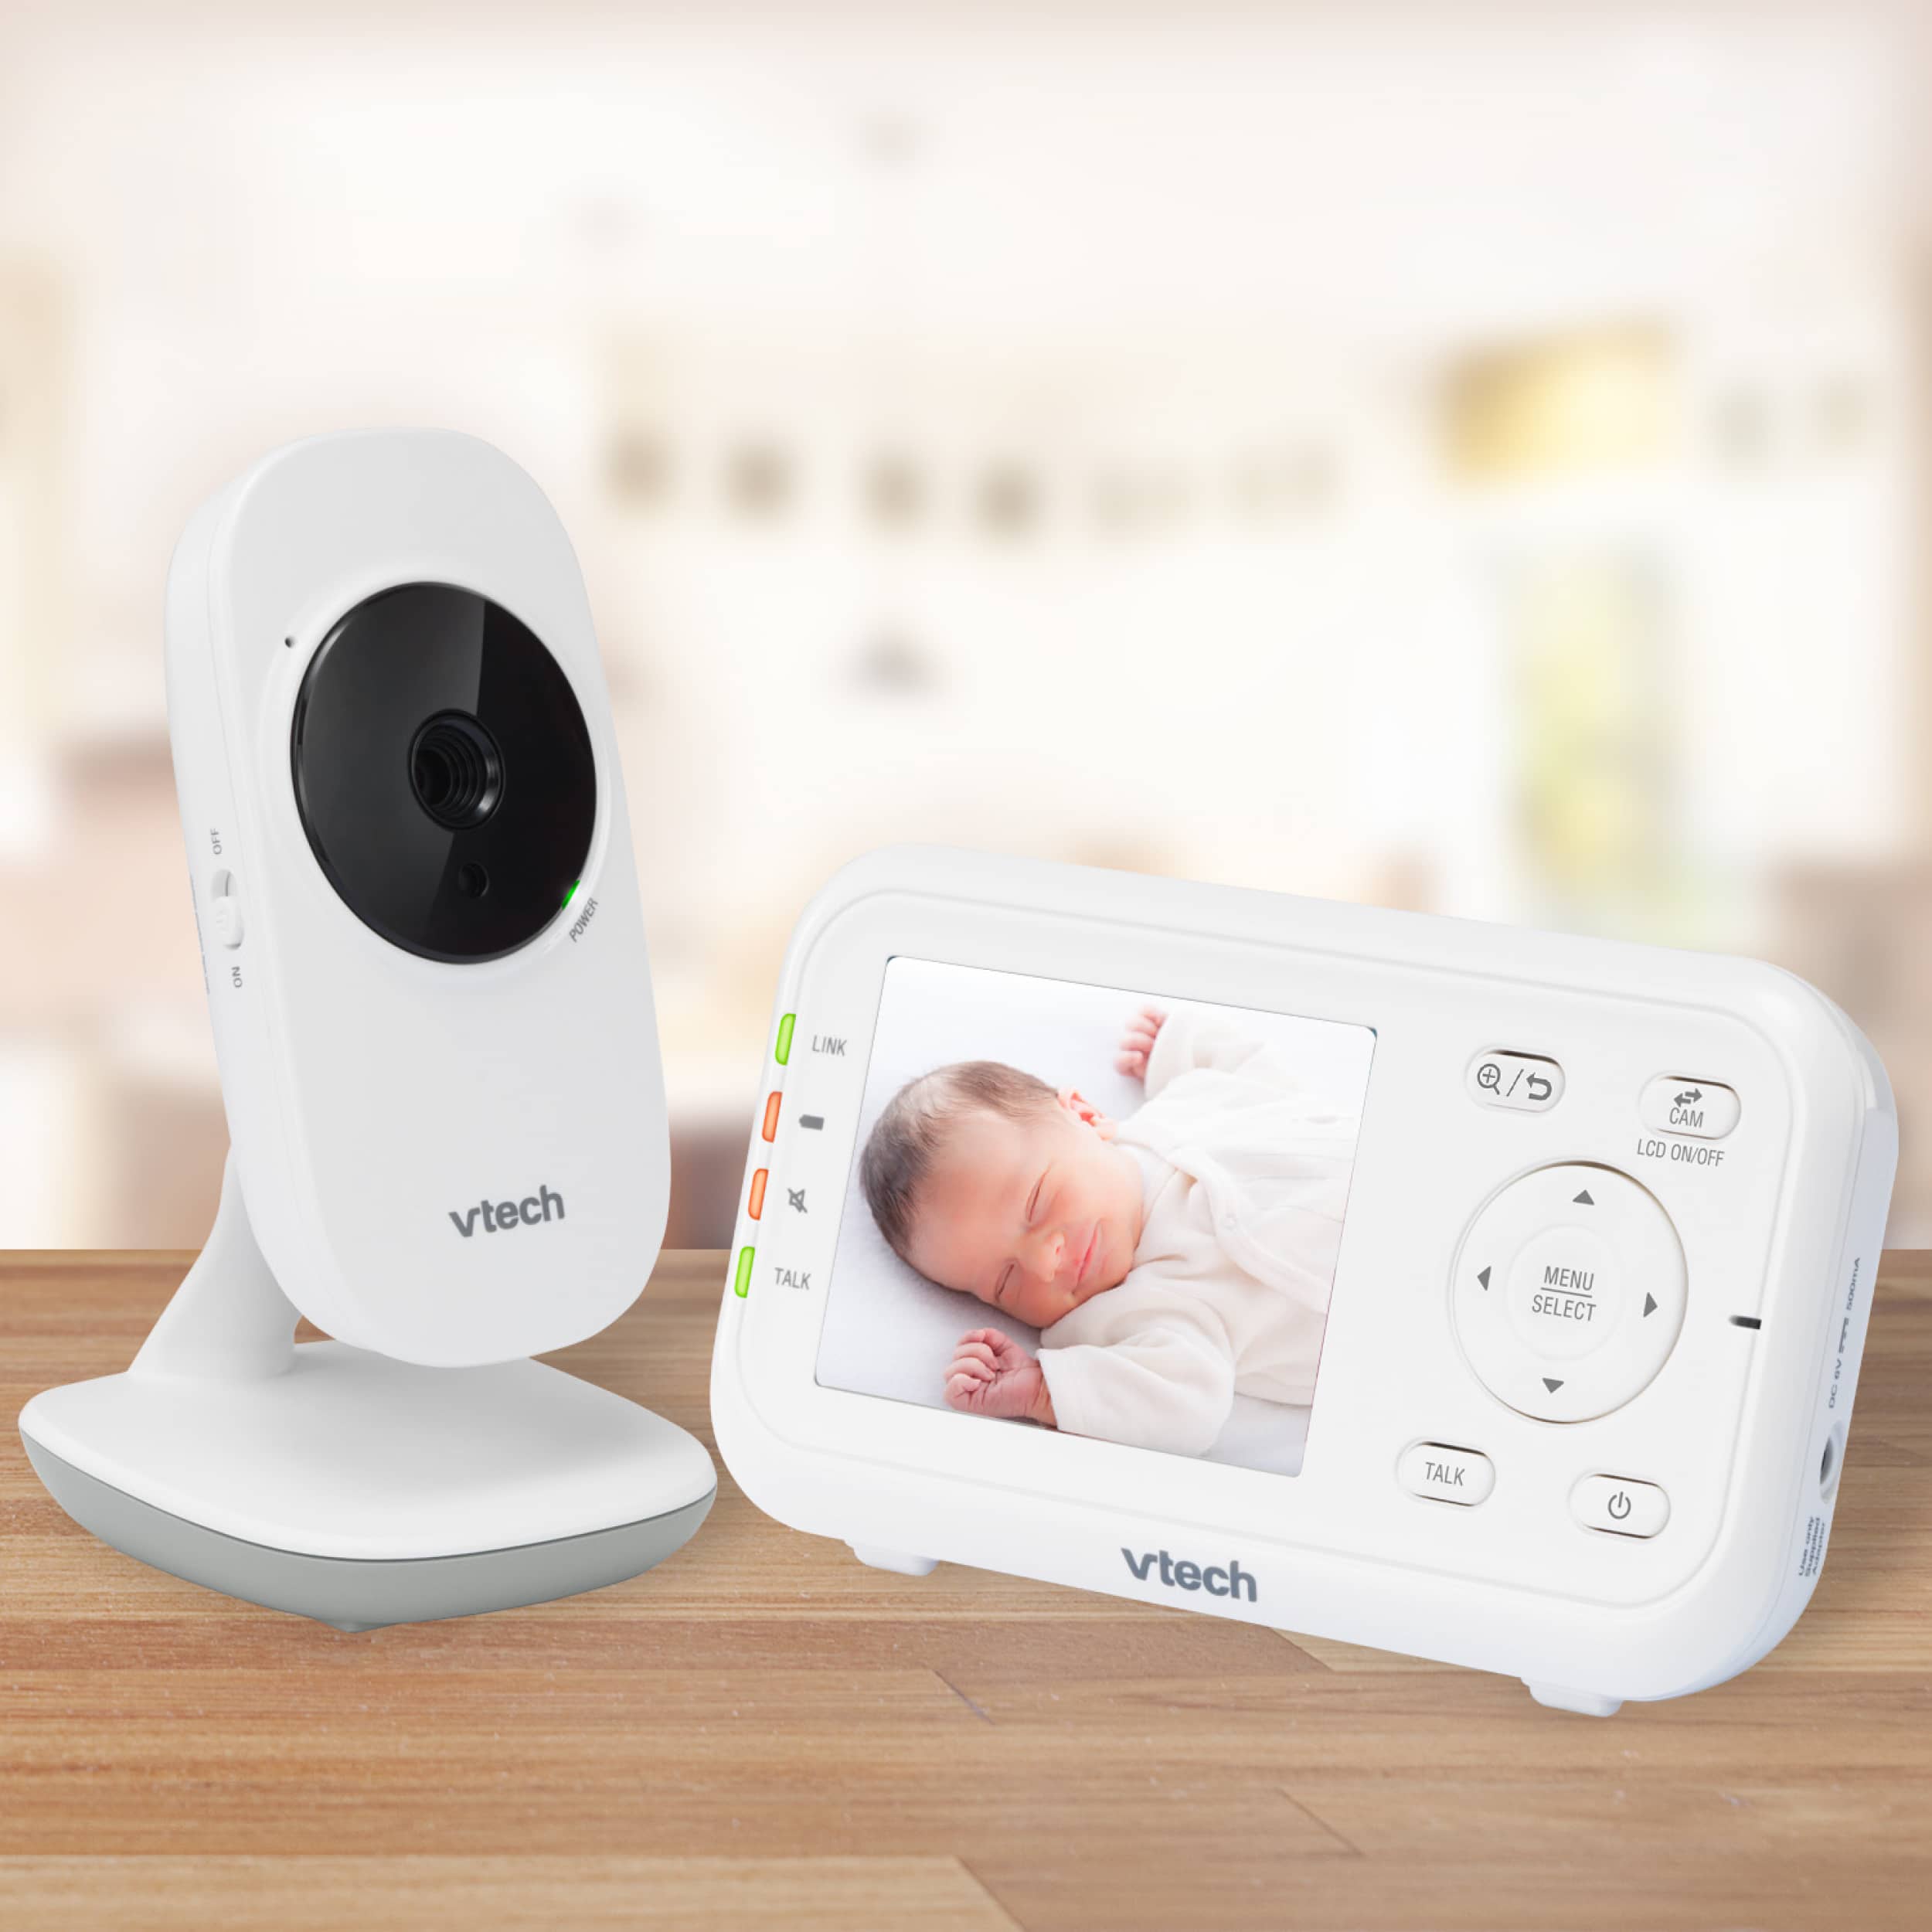 Vtech VTech VM3255 Colour Video Baby Monitor